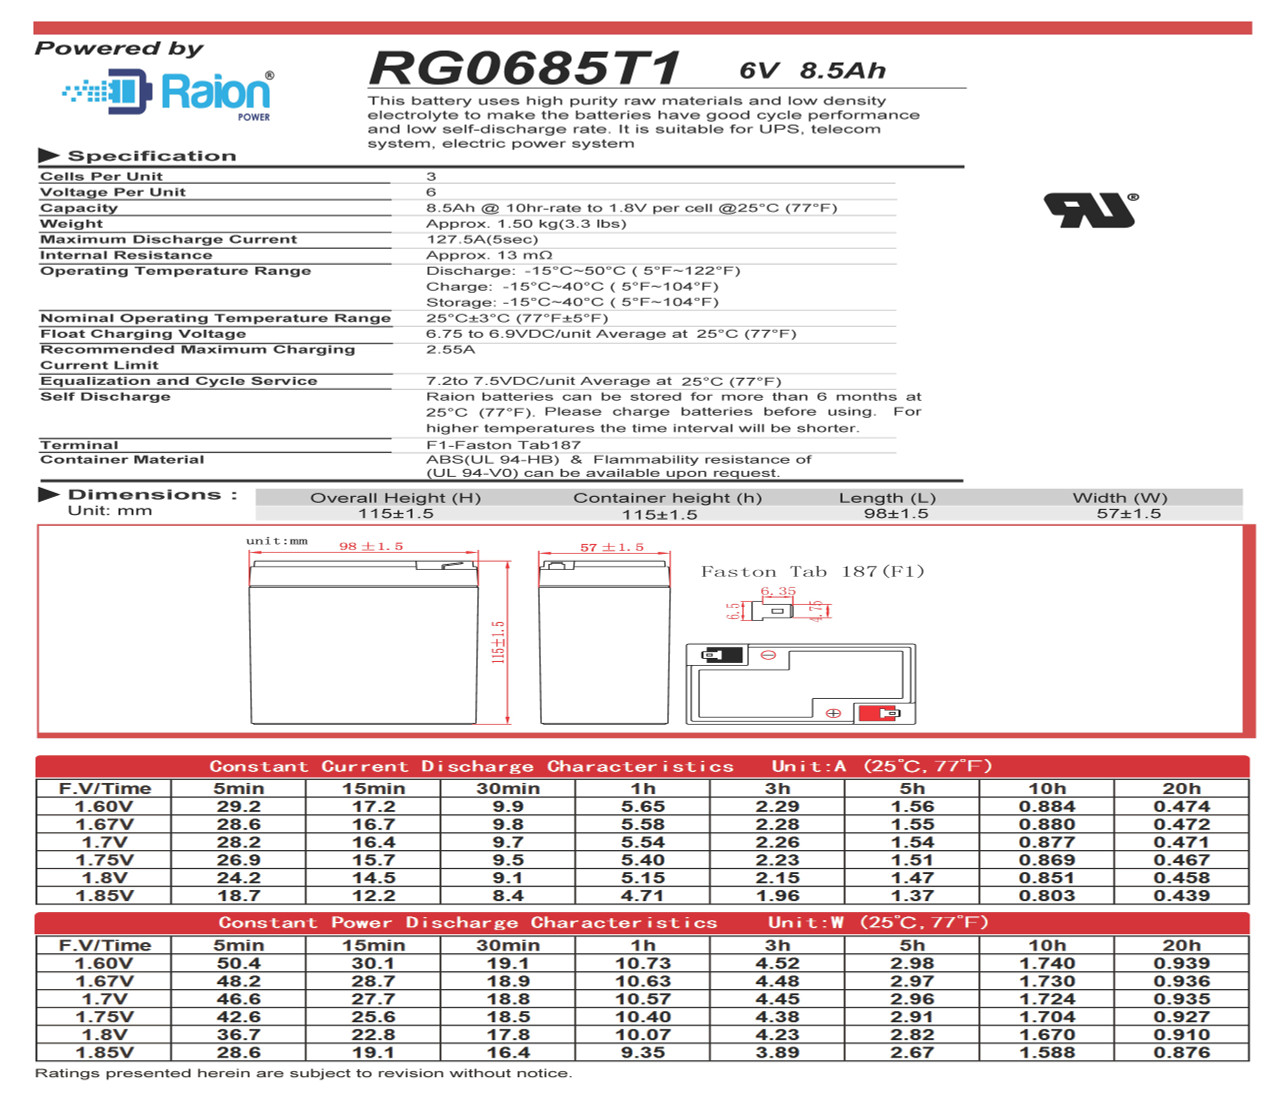 Raion Power RG0685T1 6V 8.5Ah Battery Data Sheet for ADT Security 476778